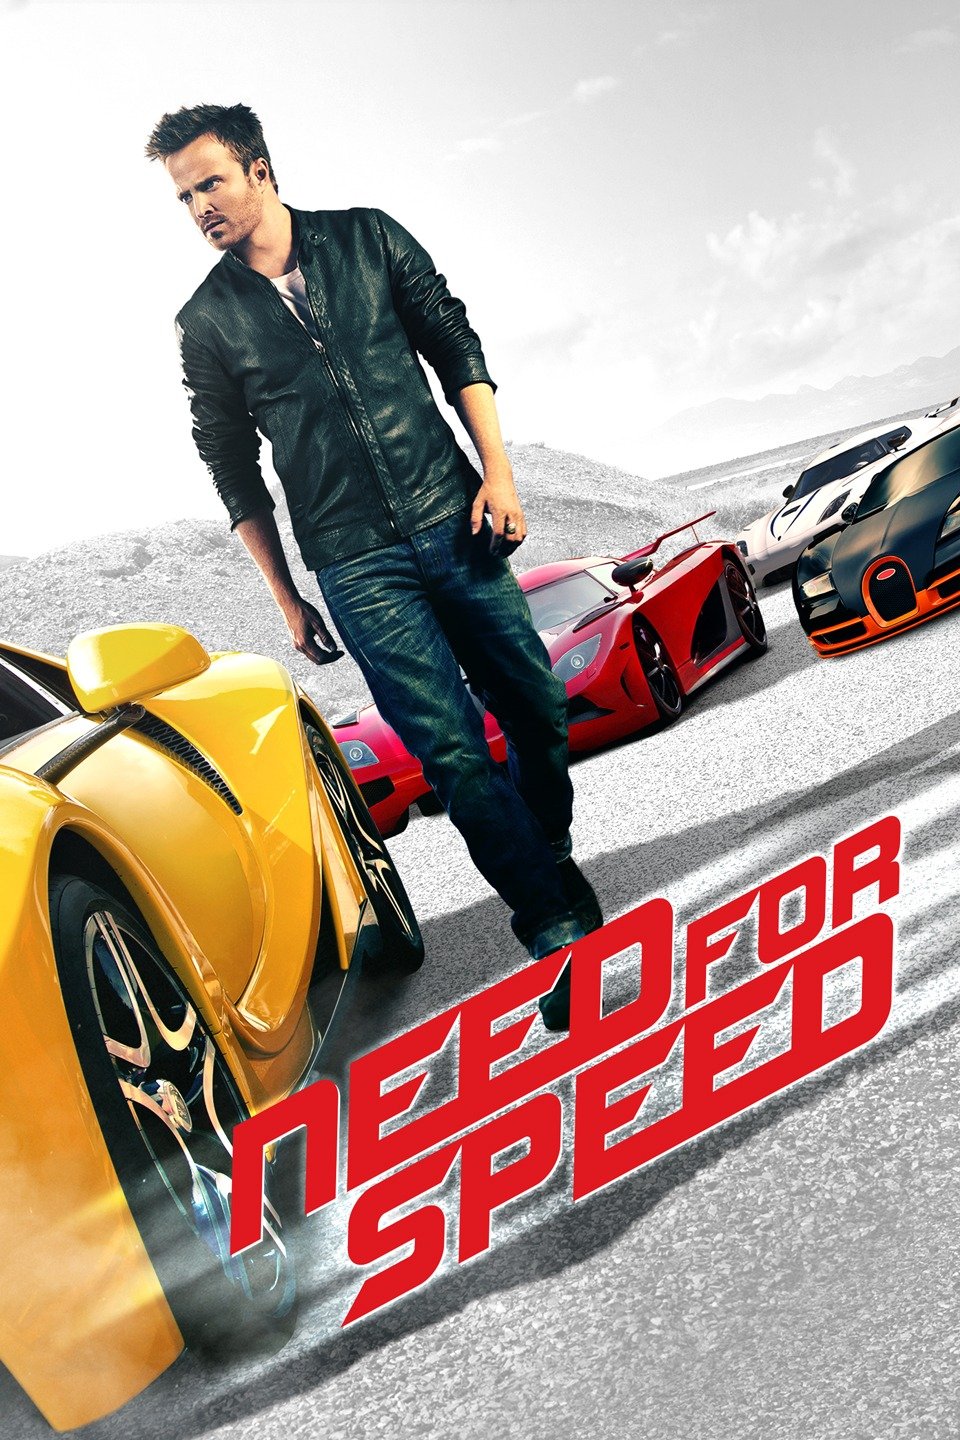 [MINI Super-HQ] Need for Speed (2014) ซิ่งเต็มสปีดแค้น [1080p] [พากย์ไทย 5.1 + อังกฤษ DTS] [บรรยายไทย + อังกฤษ] [เสียงไทย + ซับไทย] [ONE2UP]